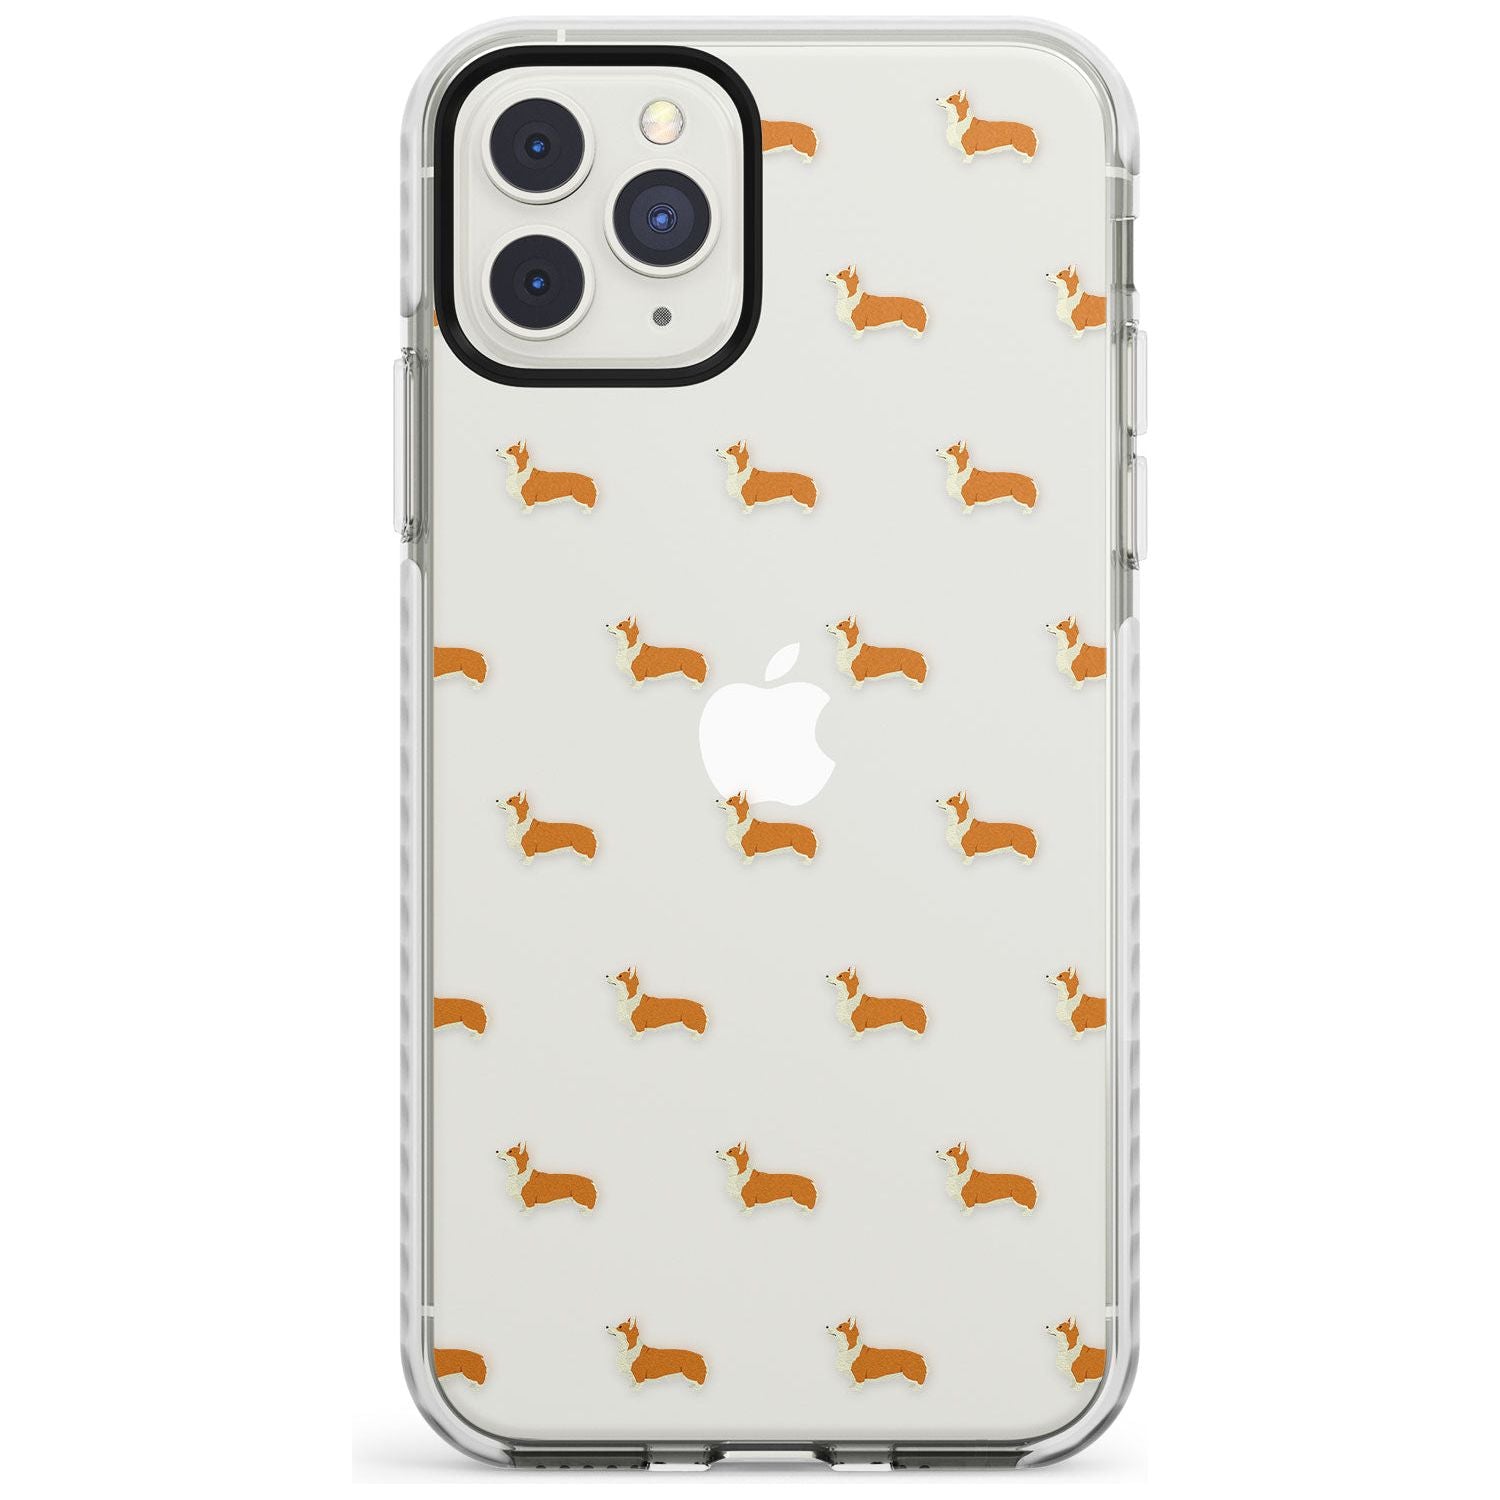 Pembroke Welsh Corgi Dog Pattern Clear Impact Phone Case for iPhone 11 Pro Max